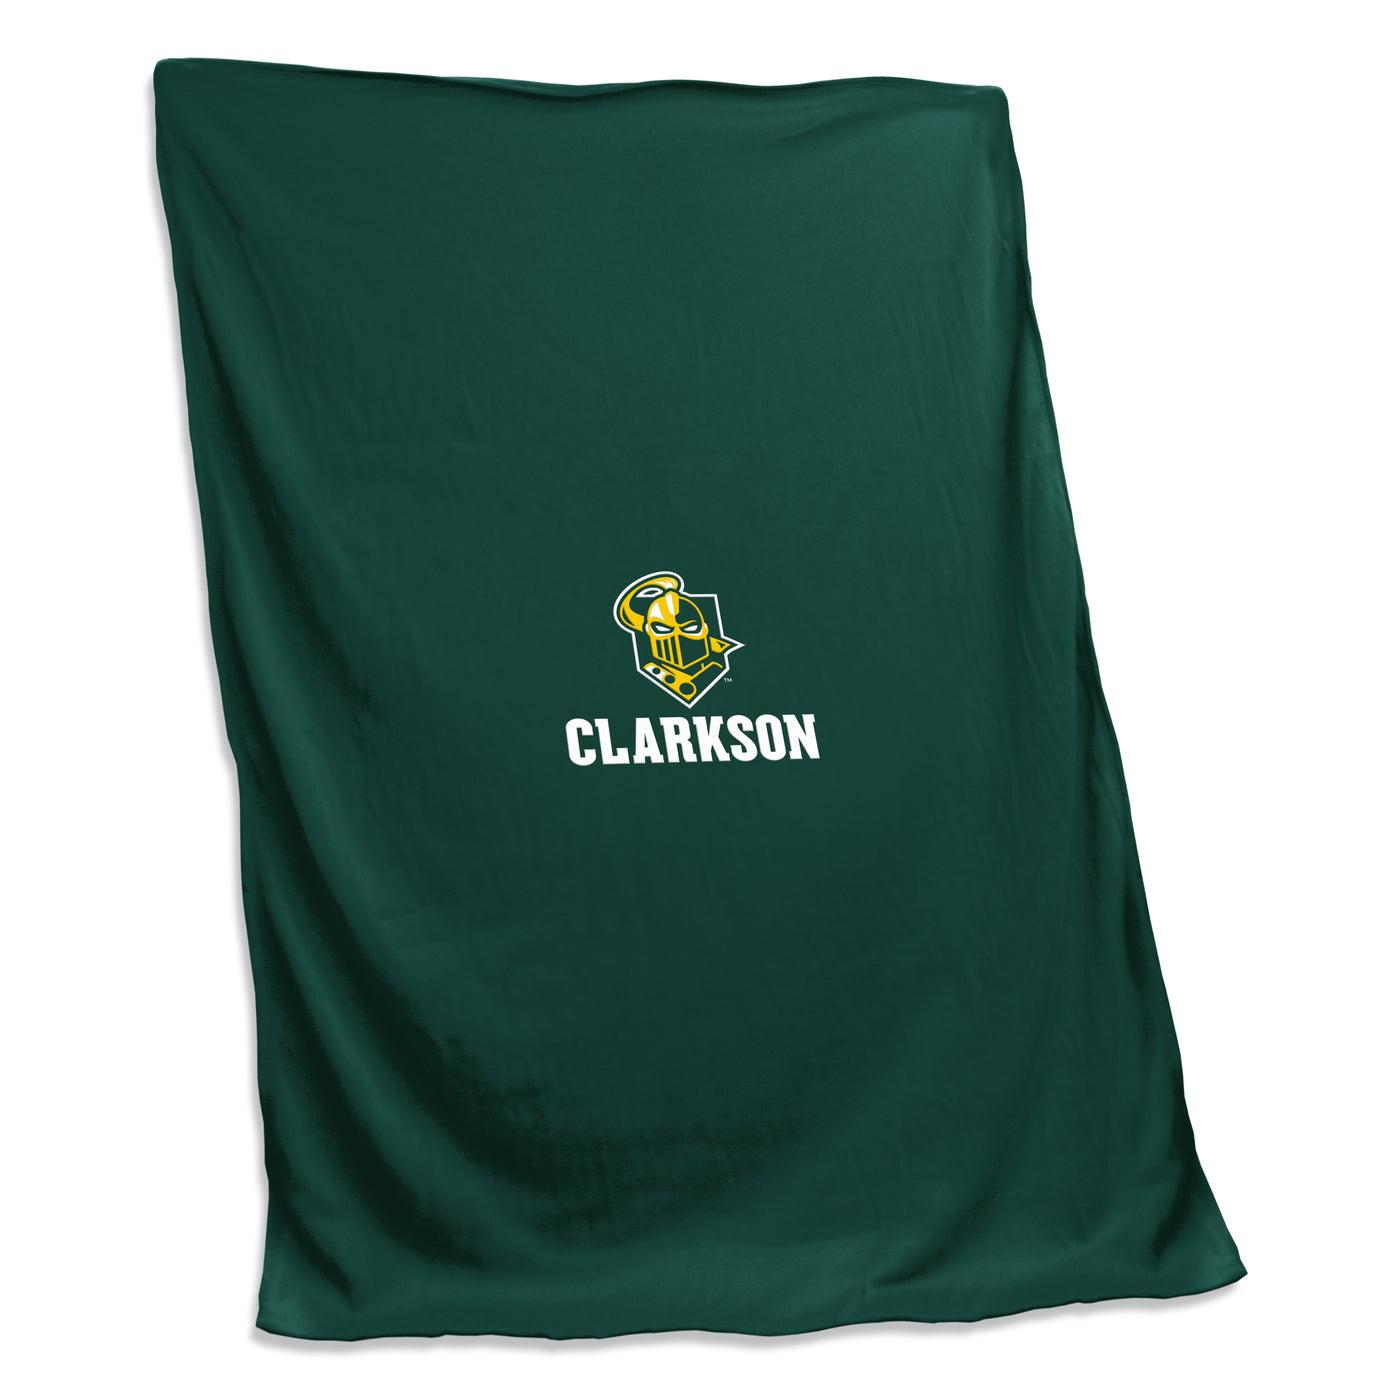 Clarkson University Hunter Screened Sweatshirt Blanket